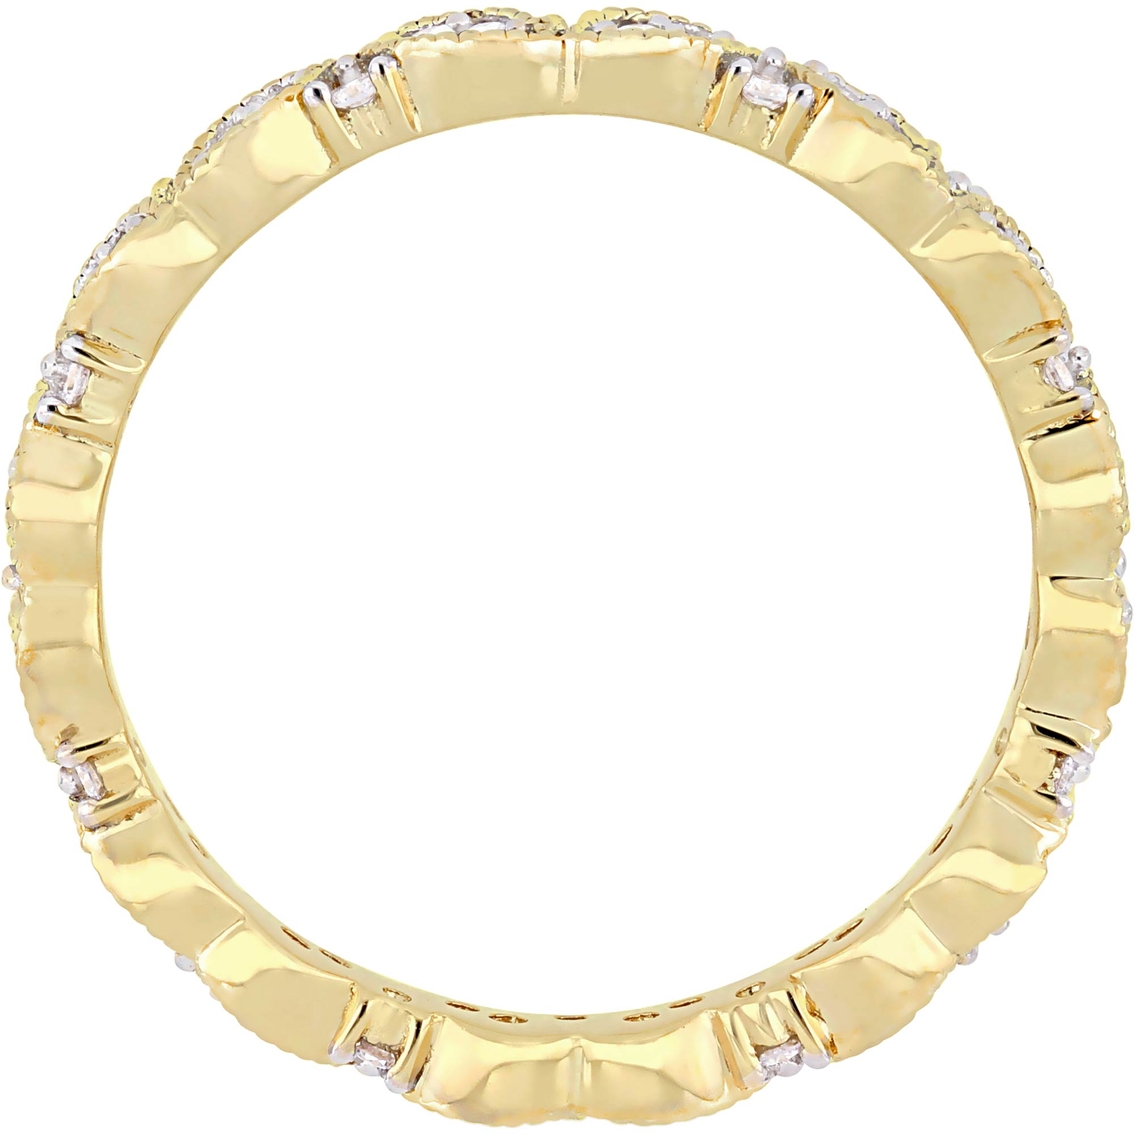 1/4 CT TW Diamond Eternity Ring in 14k White Gold - Image 3 of 4